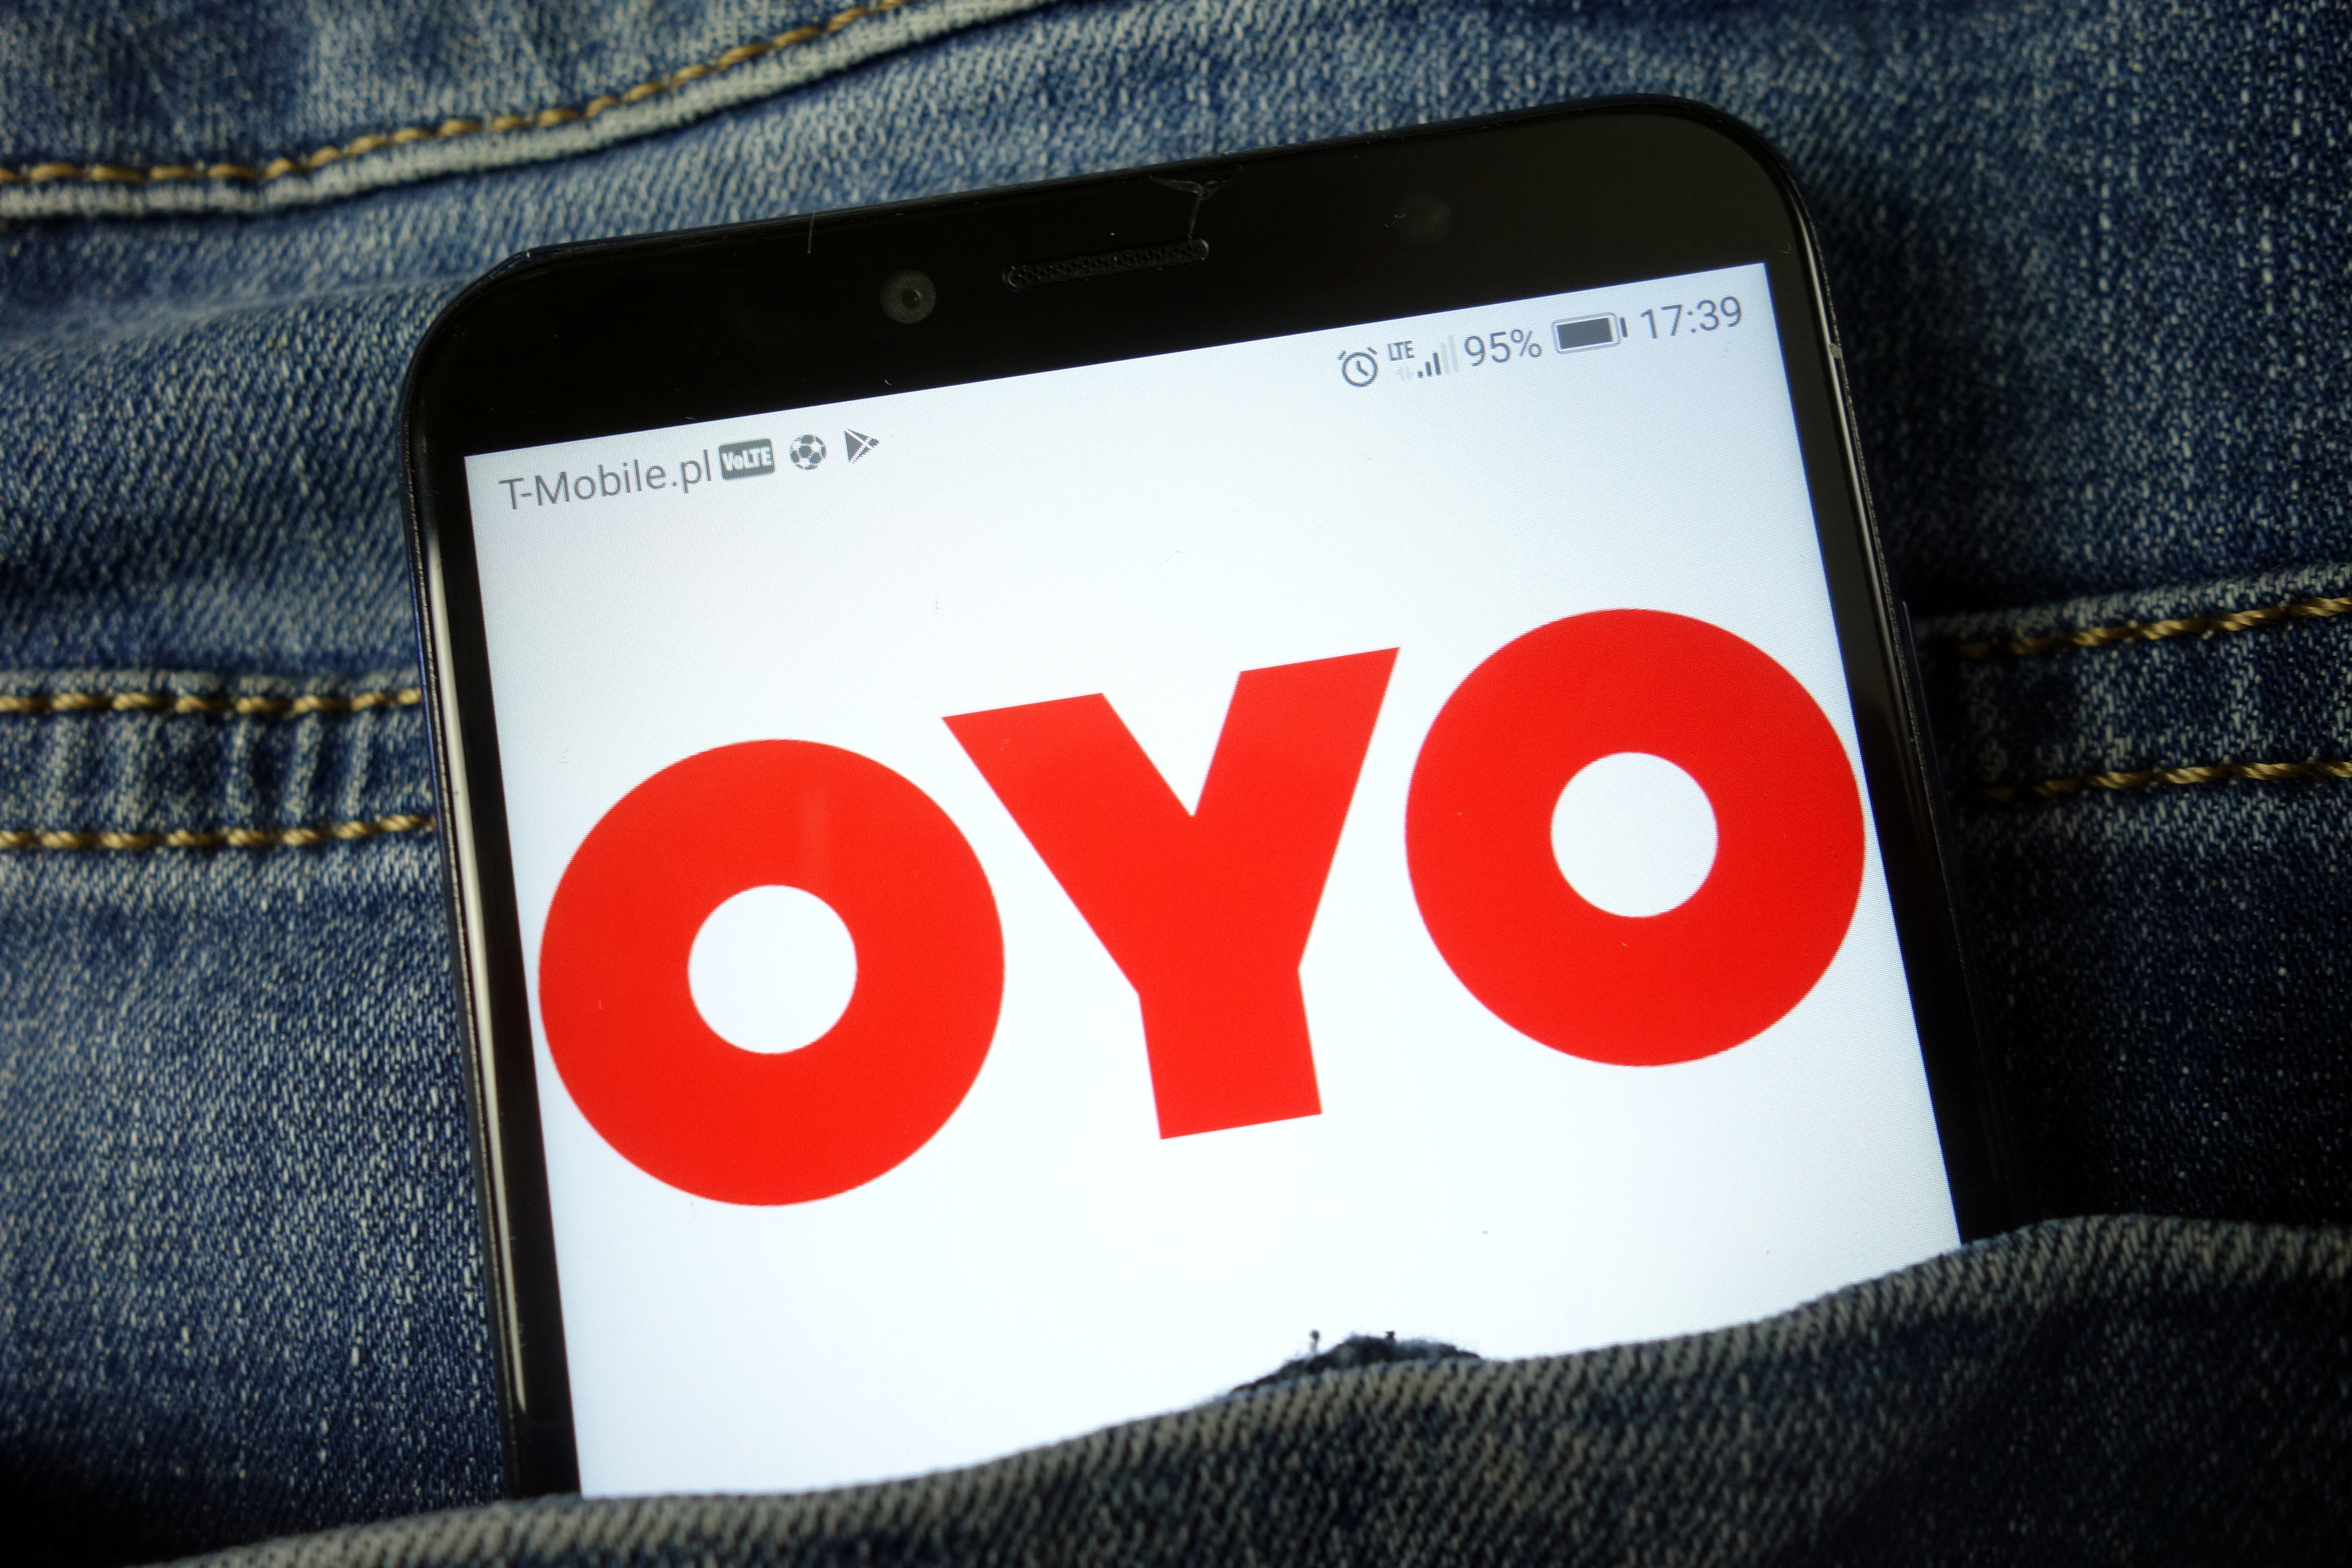 SoftBank-backed Oyo to let go over 5,000 employees globally